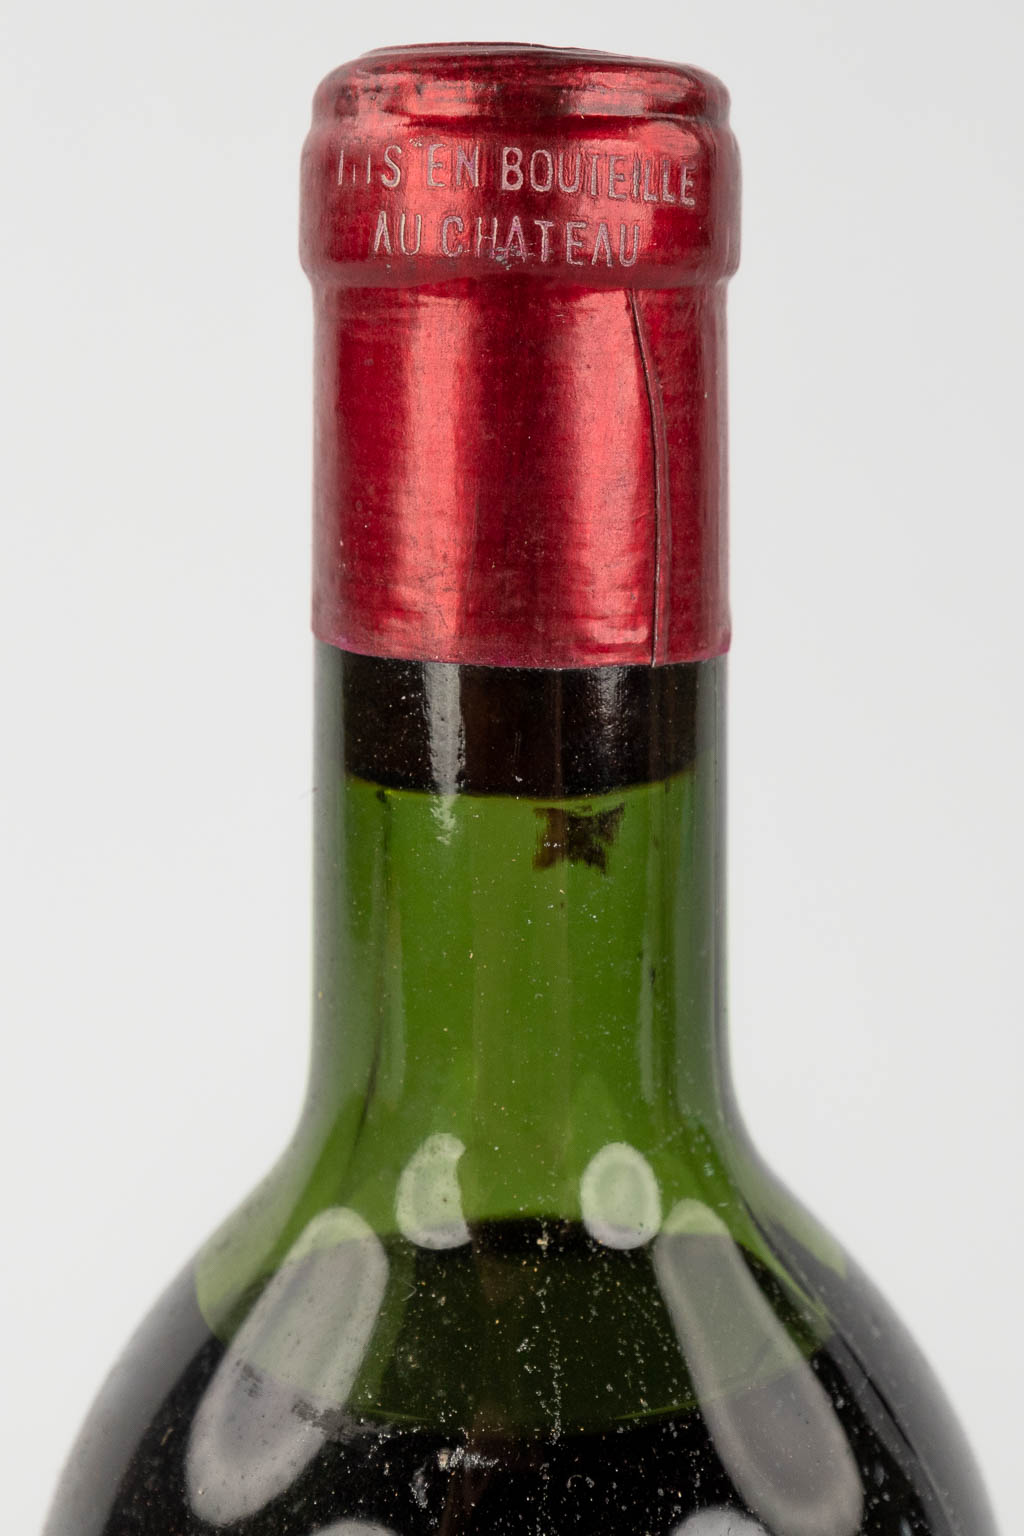 Château Petrus, 1955, 5 flessen